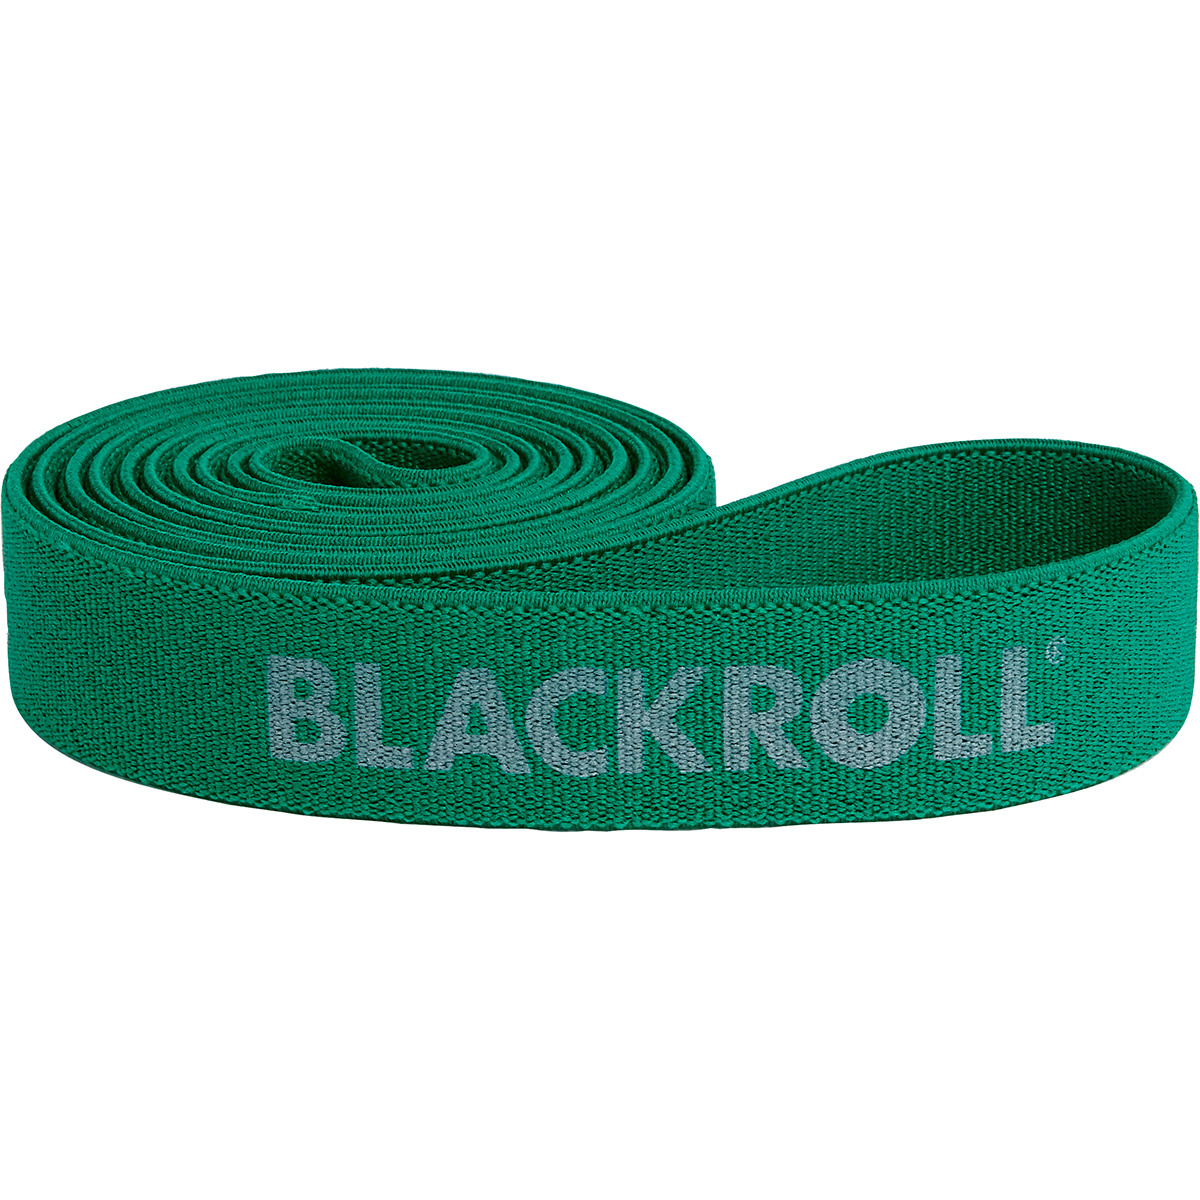 Image of Blackroll Blackroll Super Band